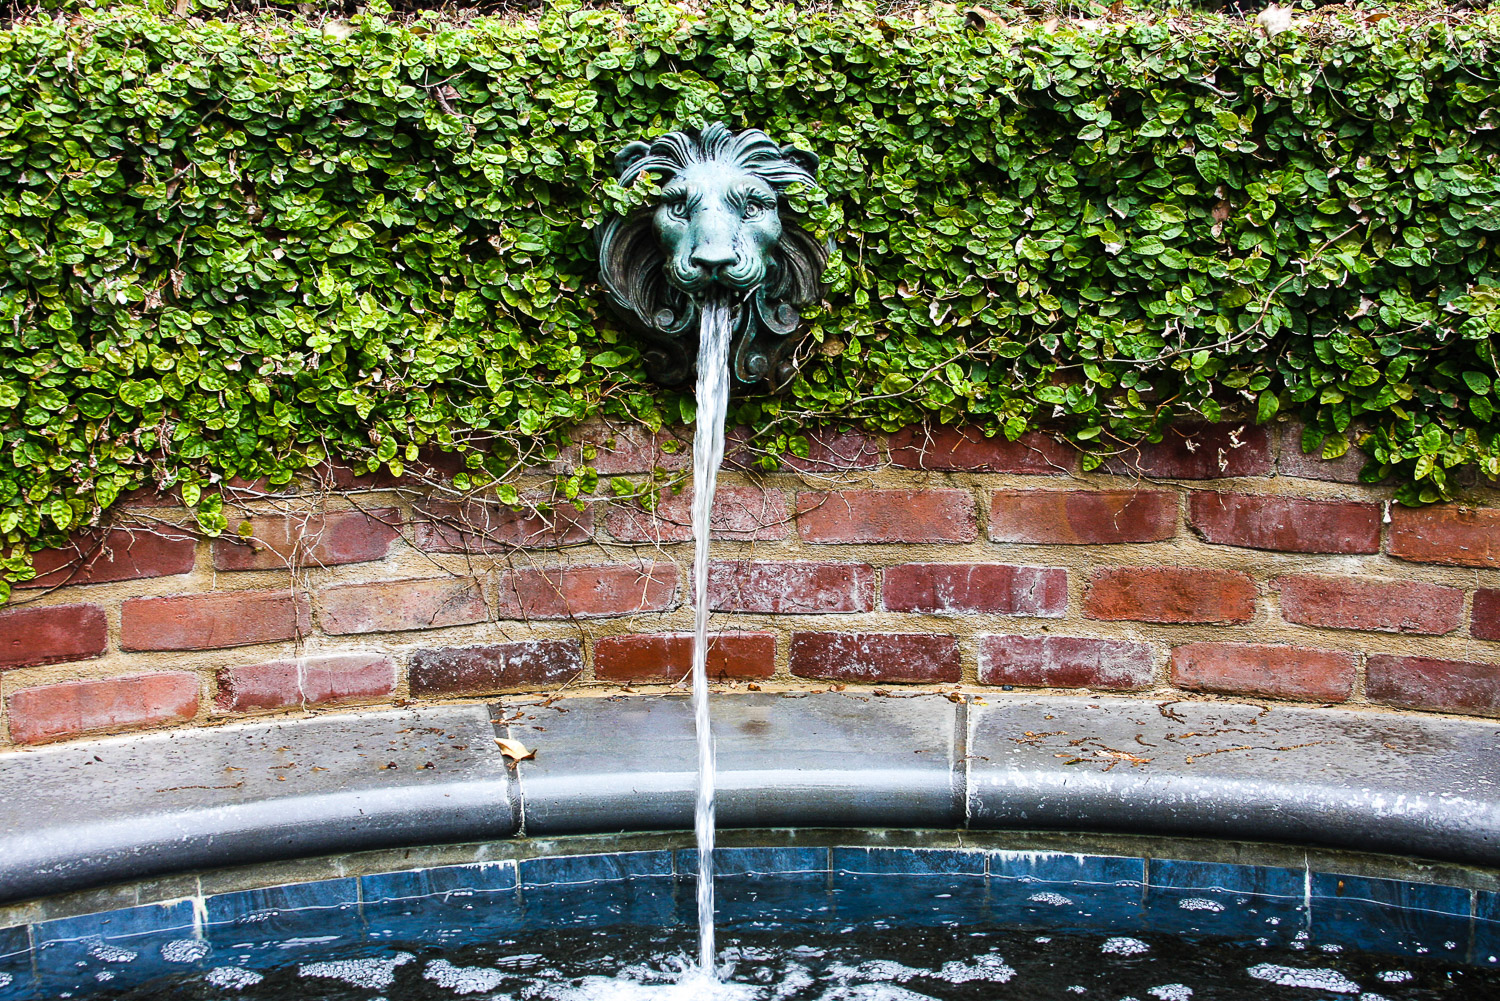 Lion's face fountain